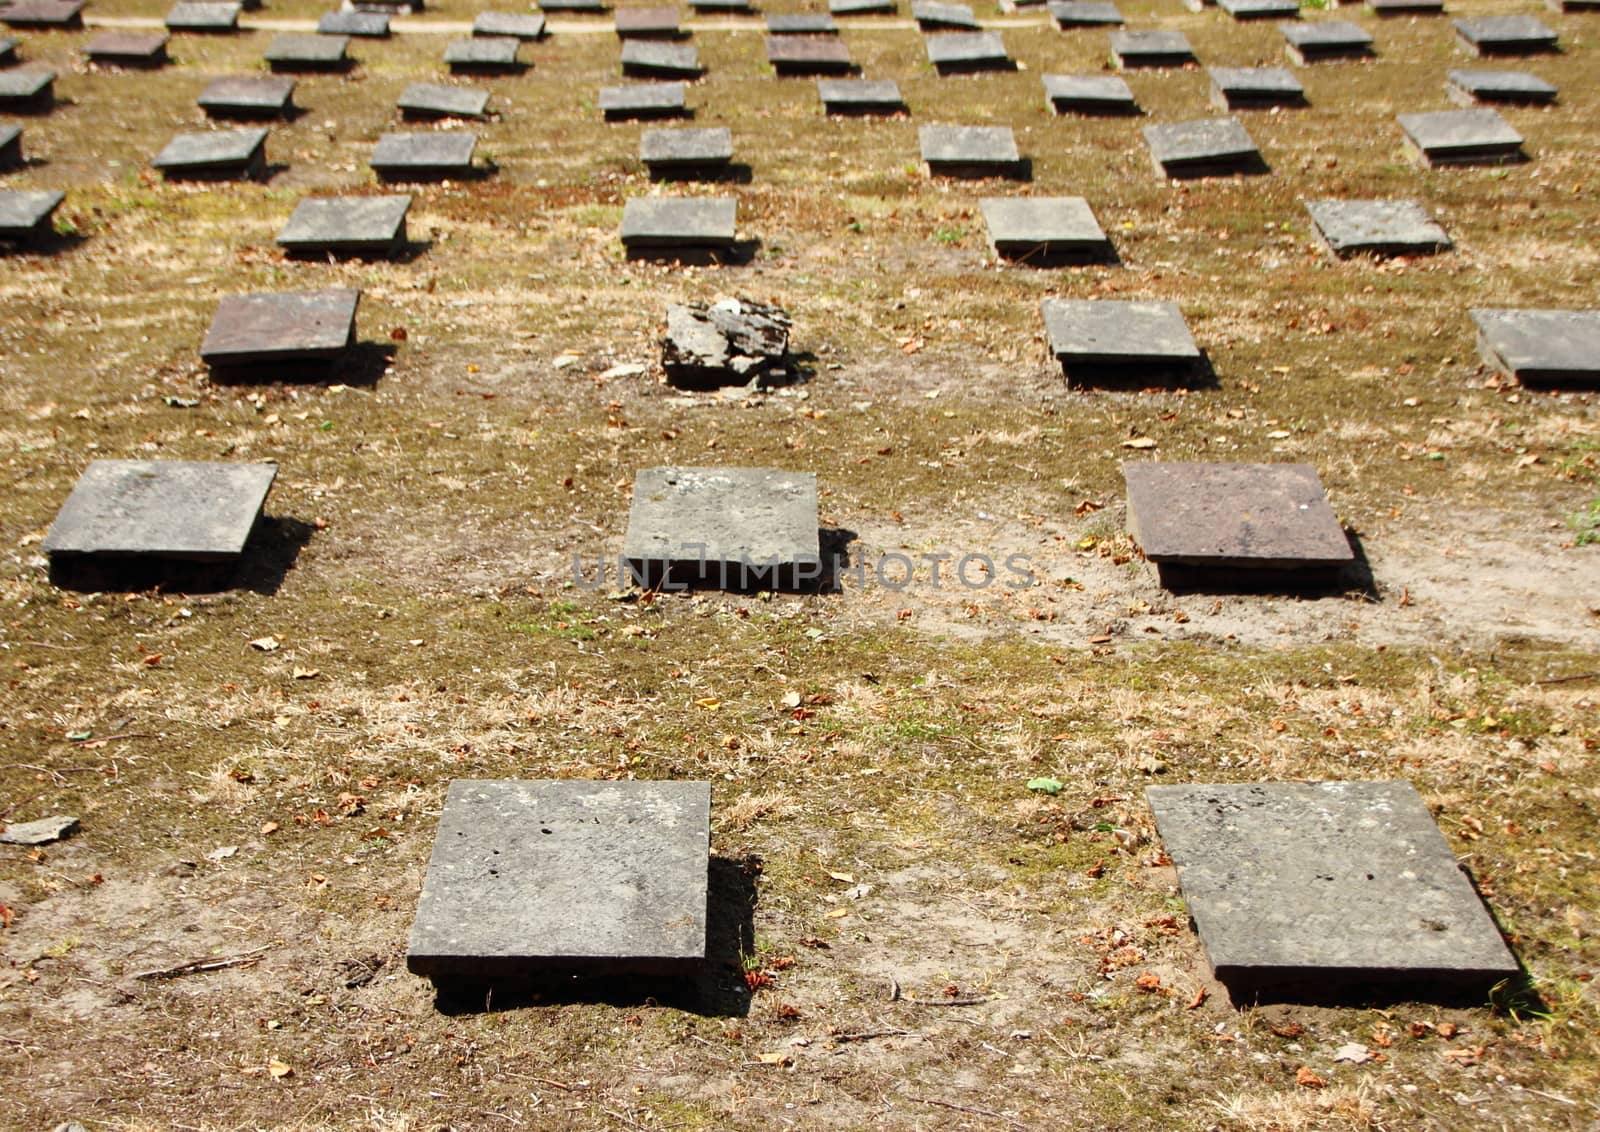 Birdseye of Headstones at Ancient Graveyard Christiansfeld